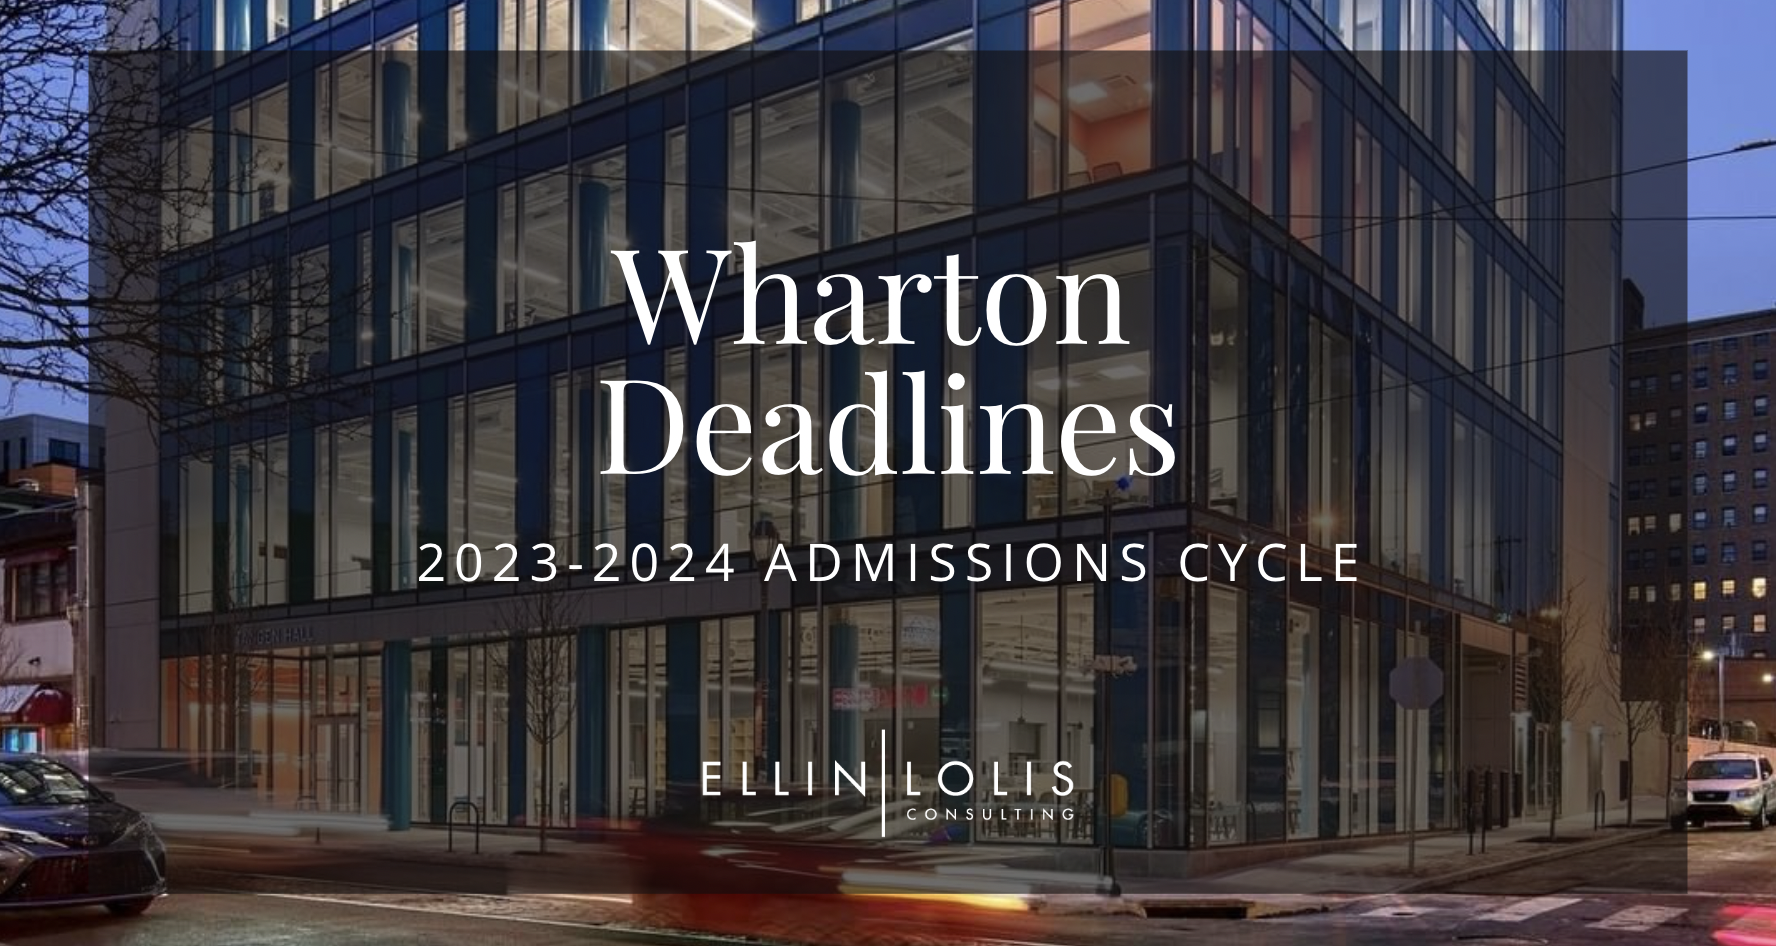 Wharton MBA Deadlines for 2023-2024